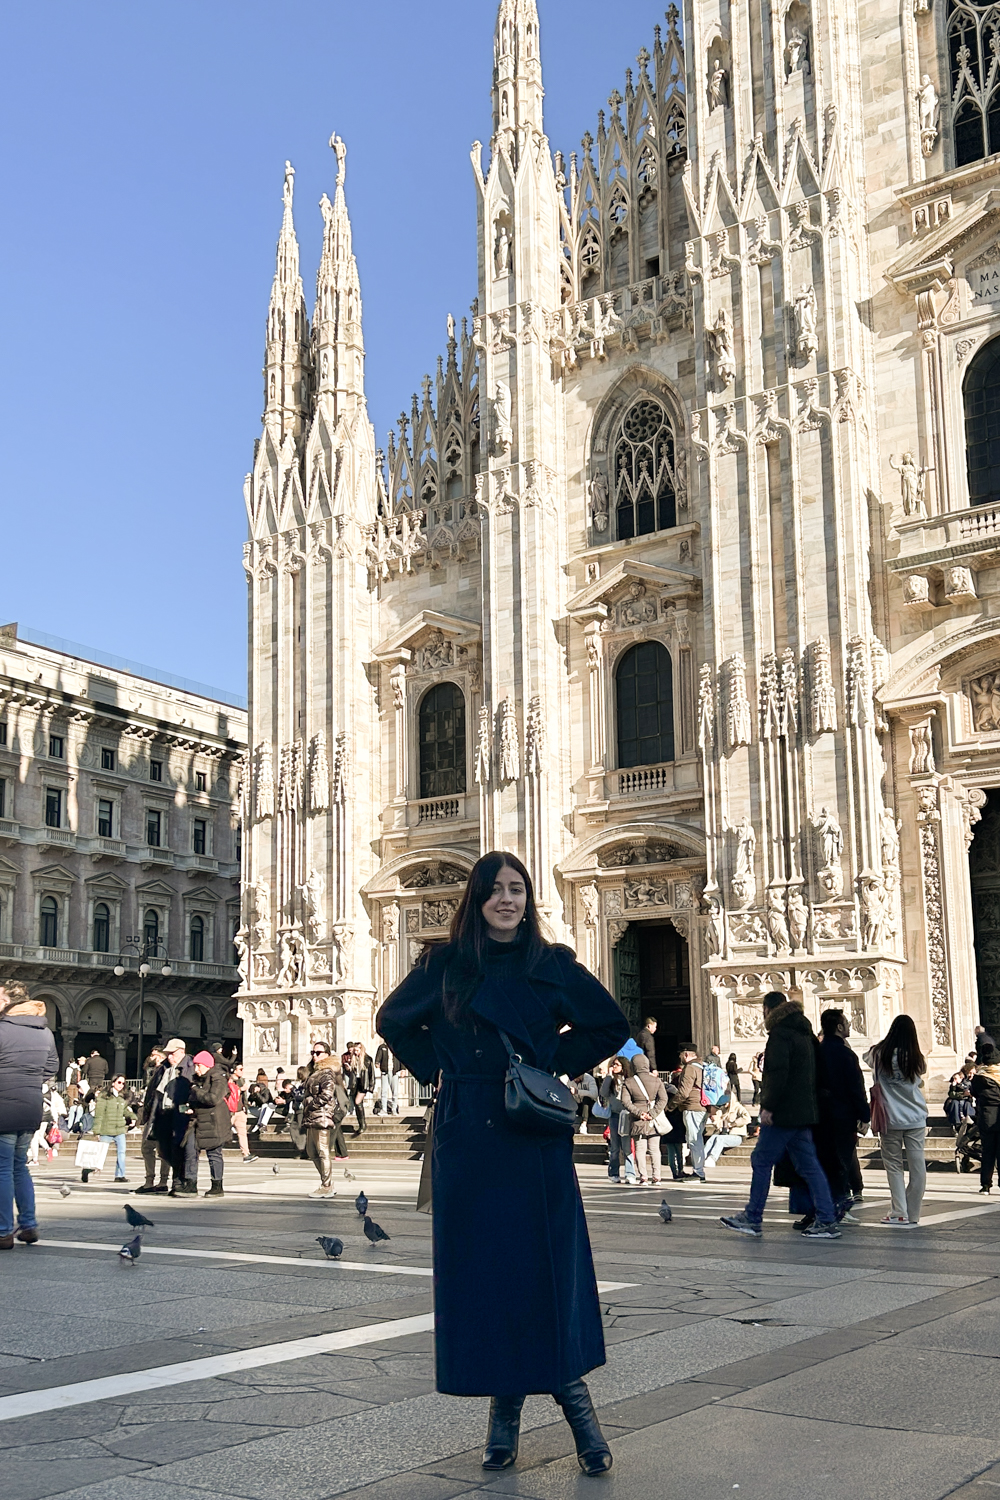 Besma stands in Piazza del Duomo, Milan